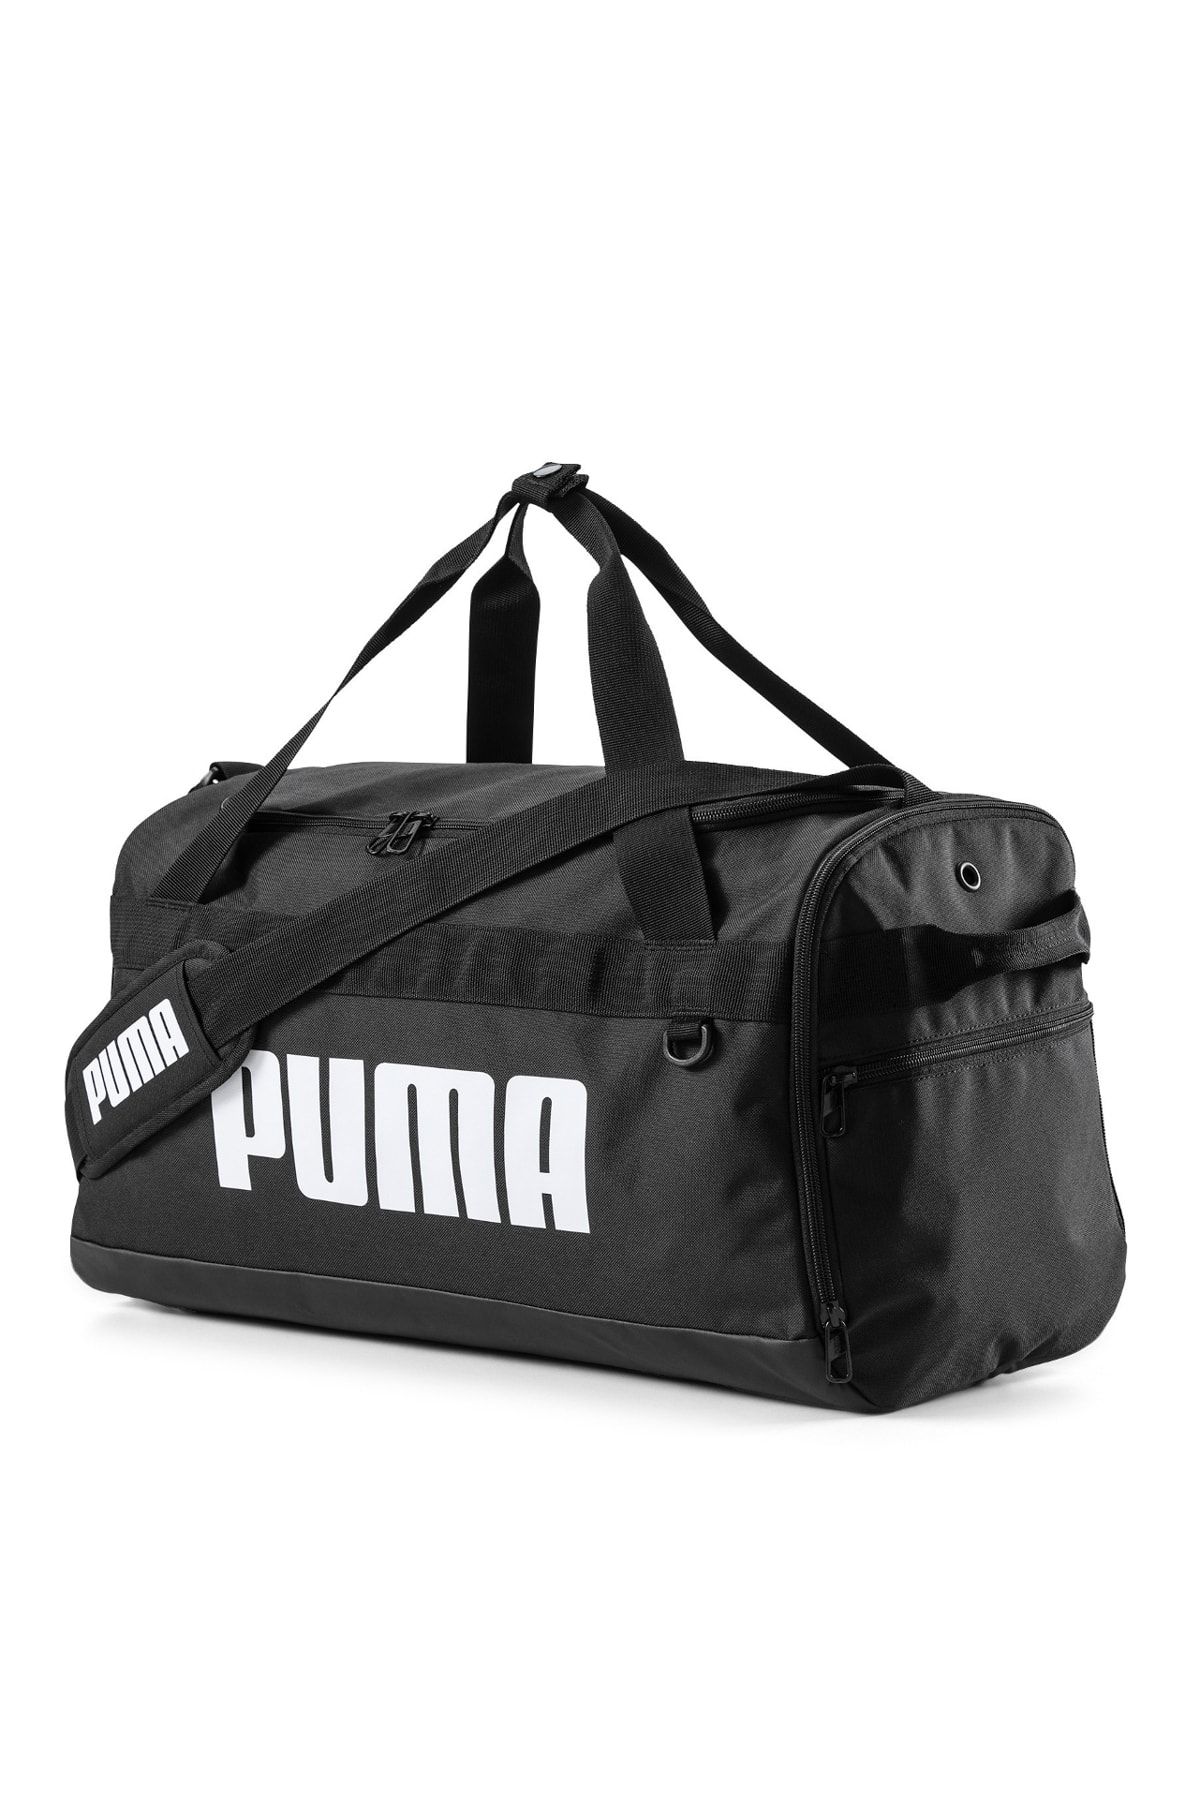 Puma Challenger Duffel Bag S Unisex Spor Çantası - 07662001